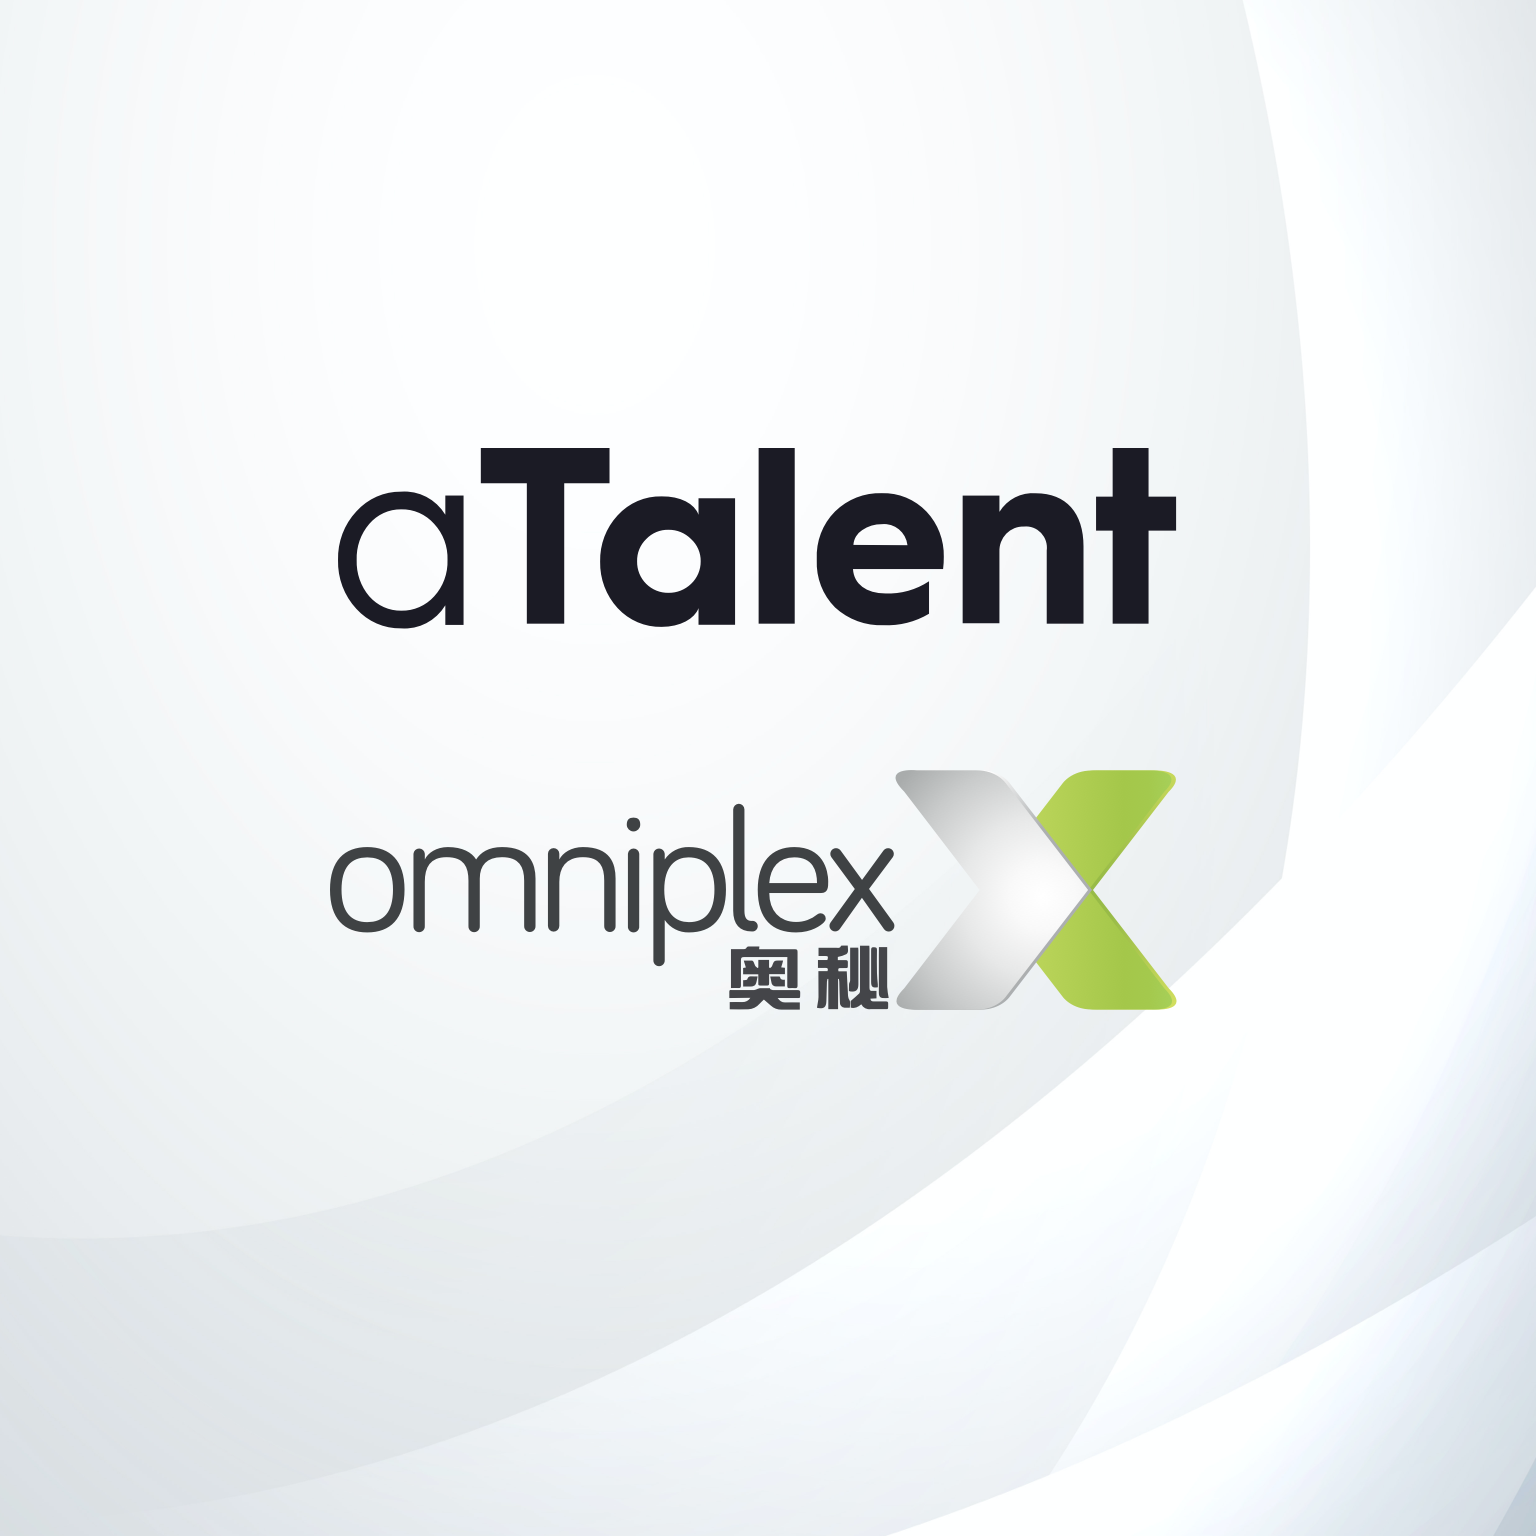 aTalent & Omniplex China 奥秘中国强强联手，打造企业数字化学习发展沙龙 1